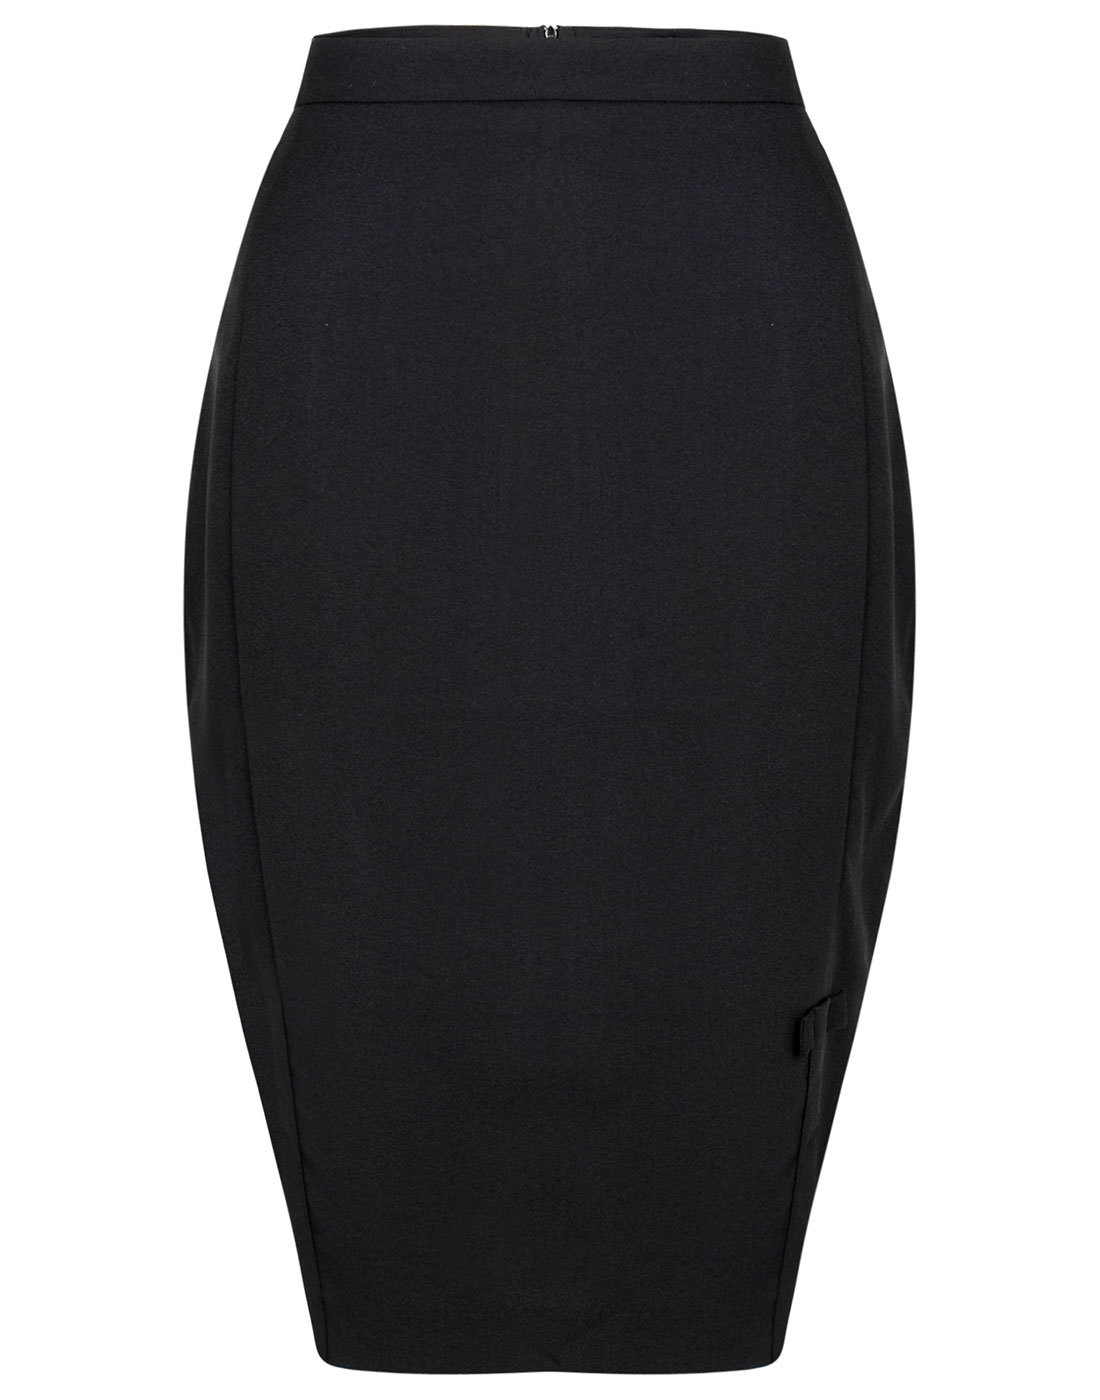 FEVER Ashcott Retro 50s Vintage Style Fitted Pencil Skirt Black